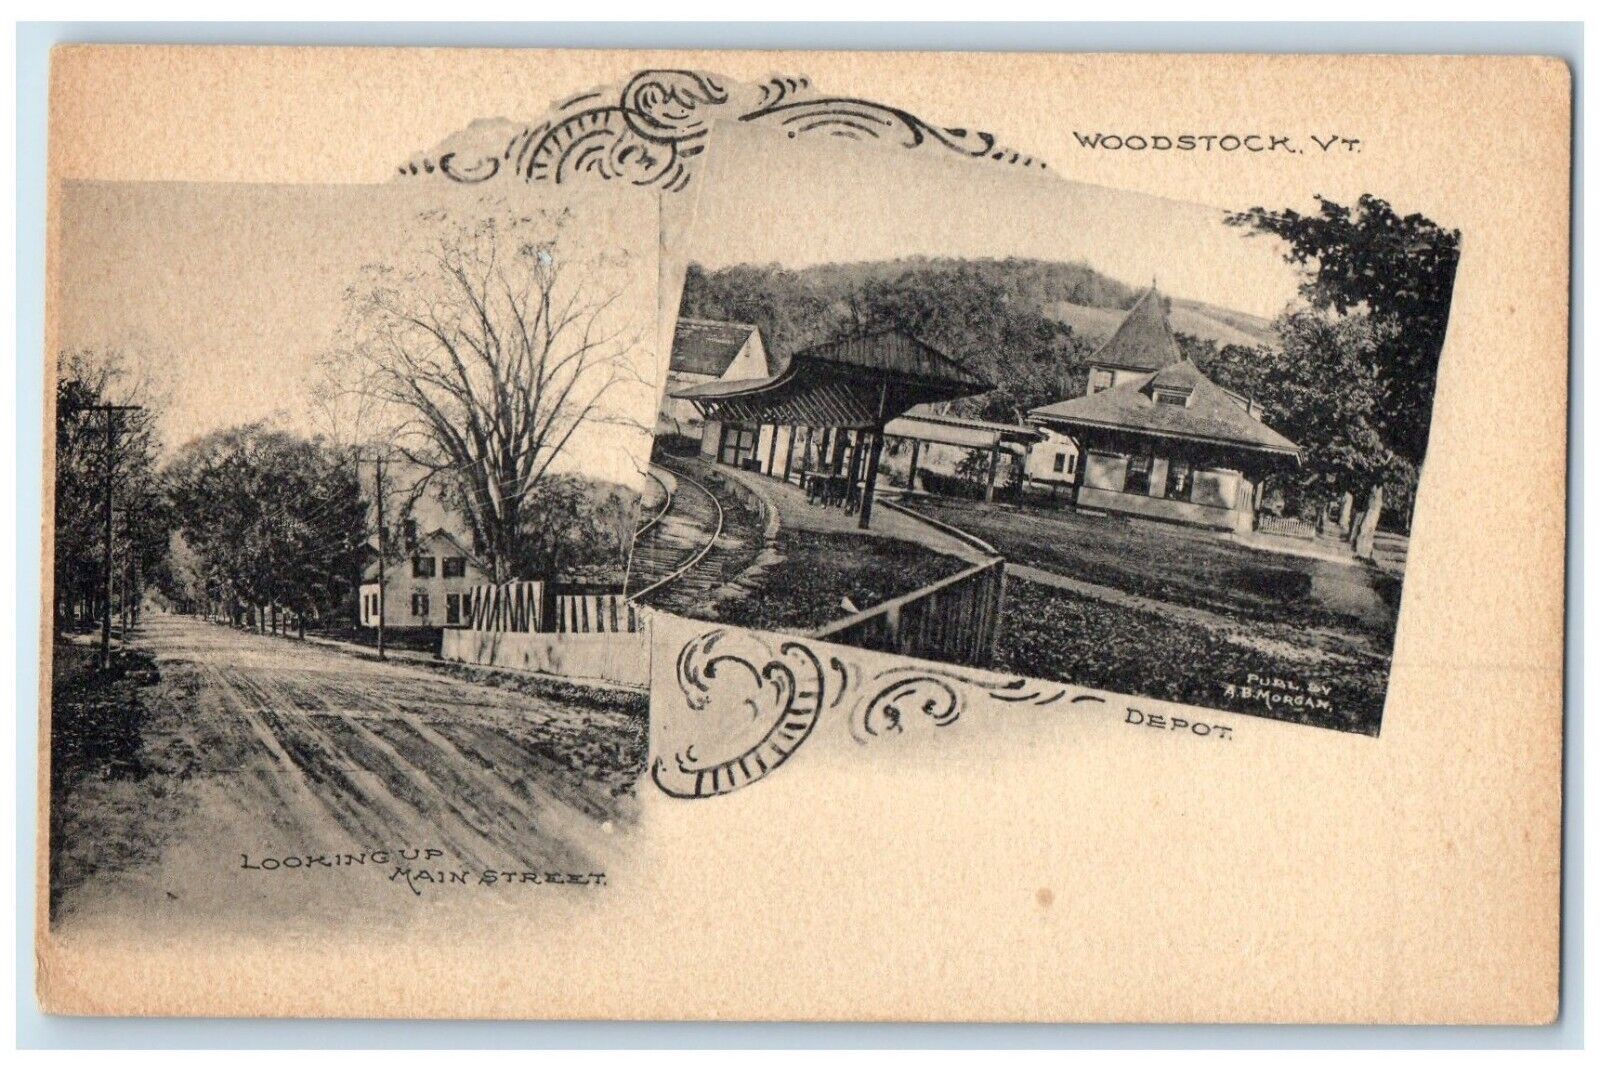 c1905 Railroad Station Depot Looking Up Main Street Woodstock VT Postcard  